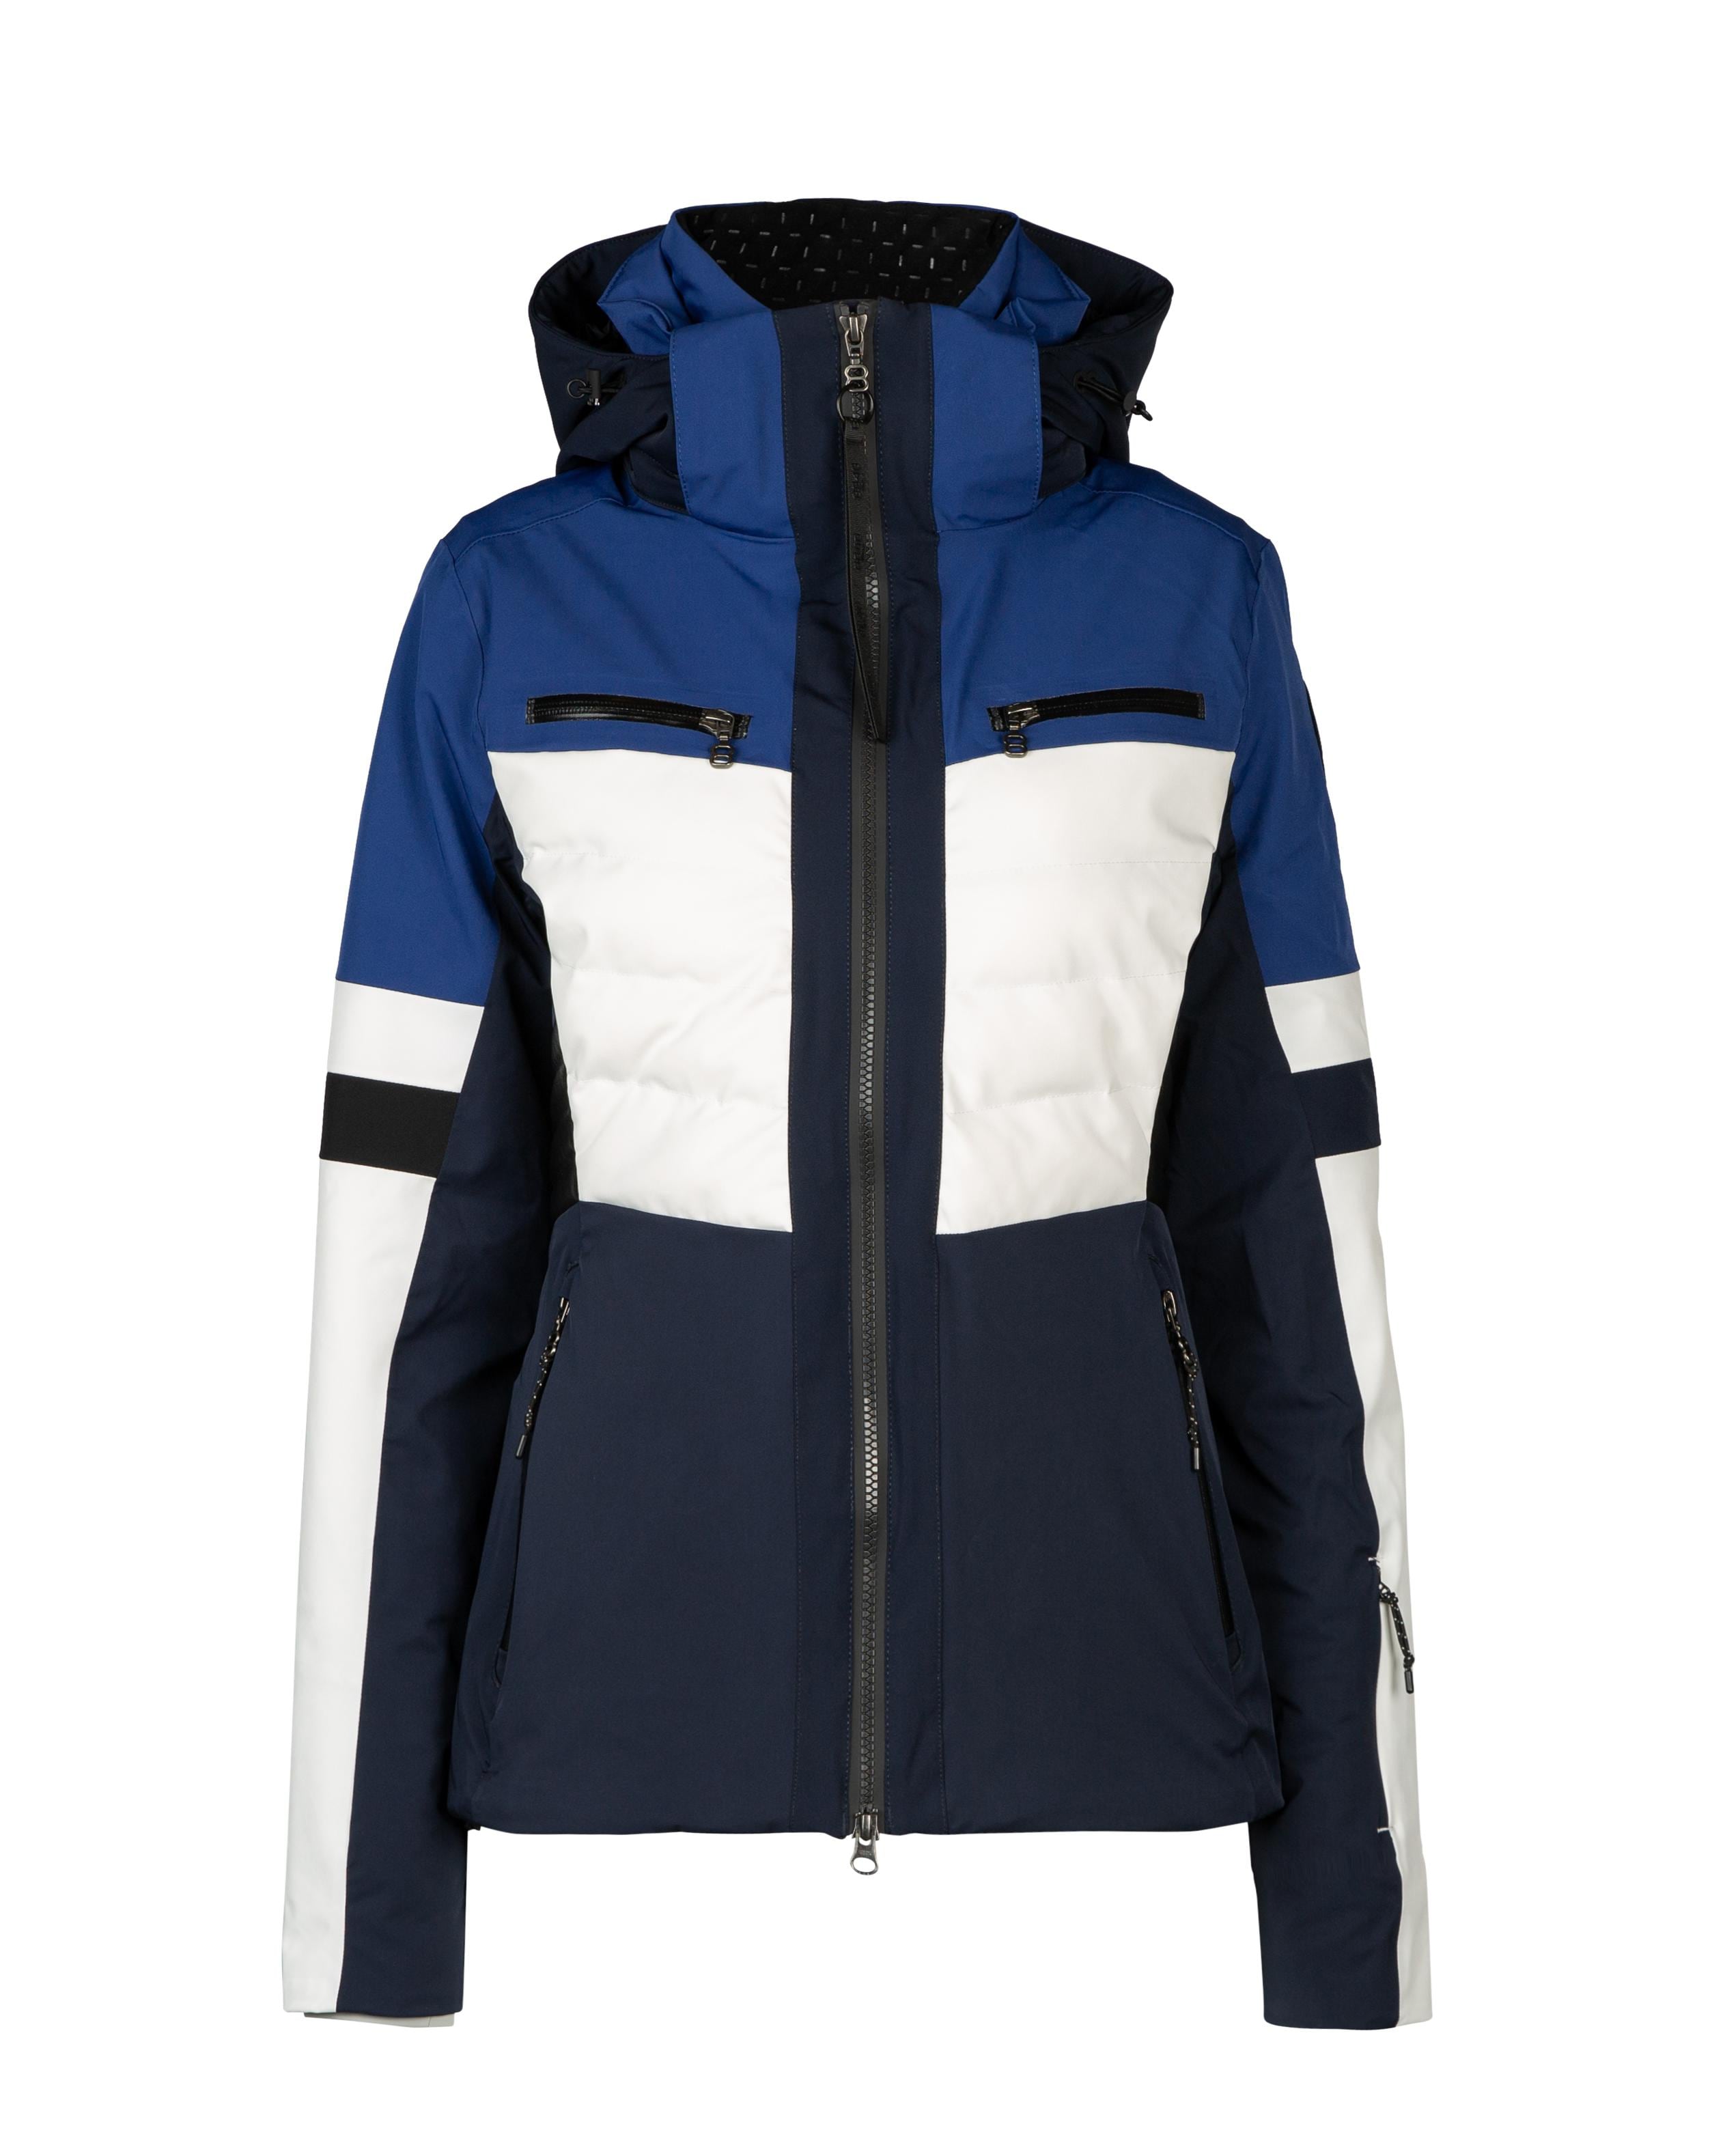 Zena W Jacket Navy - Navy blue ski jacket women